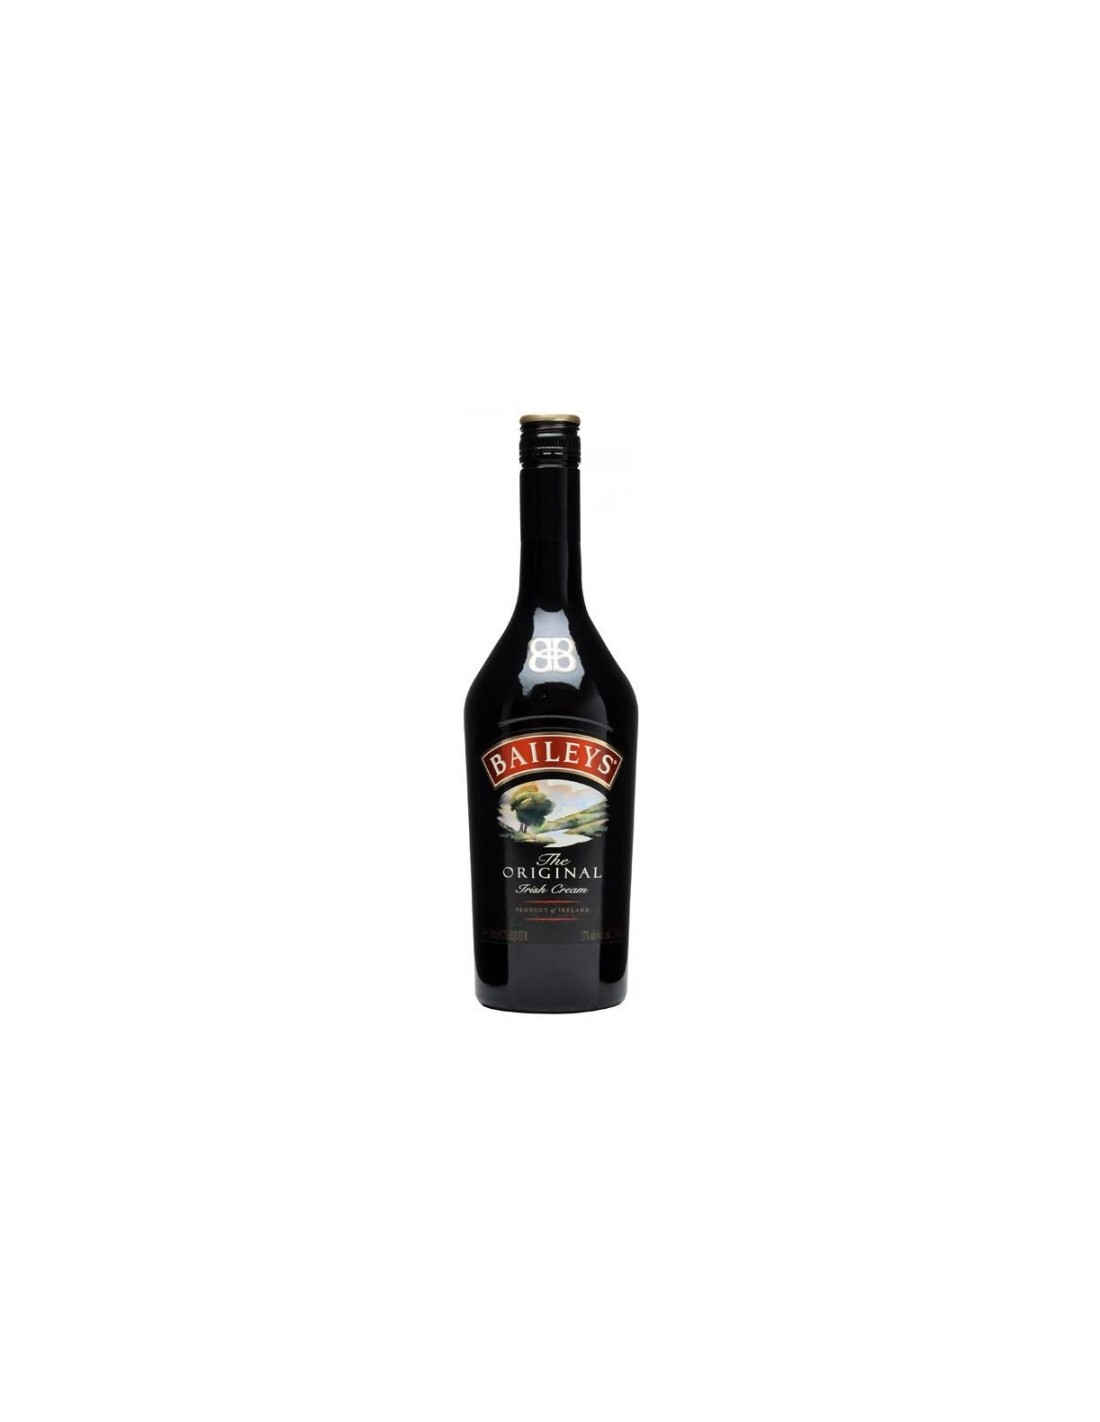 Lichior Baileys The Original Irish Cream 17% alc., 0.7L, Irlanda alcooldiscount.ro